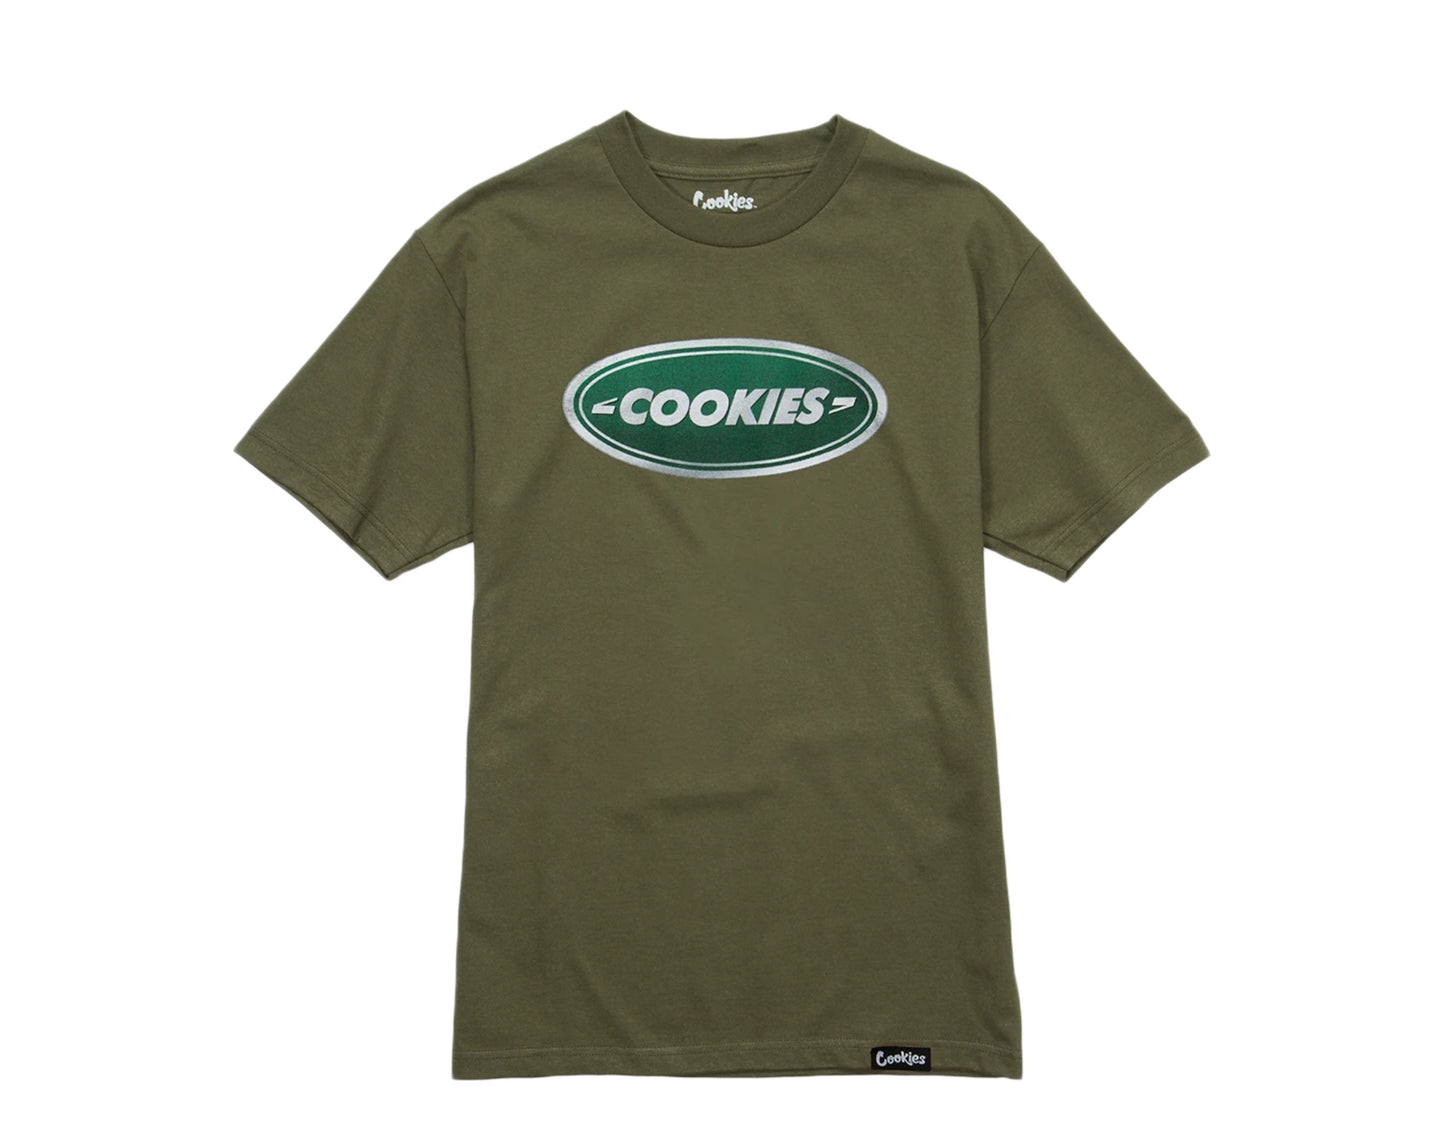 Cookies Luxury Olive Rover Men's Tee Shirt 1545T4178-OLI